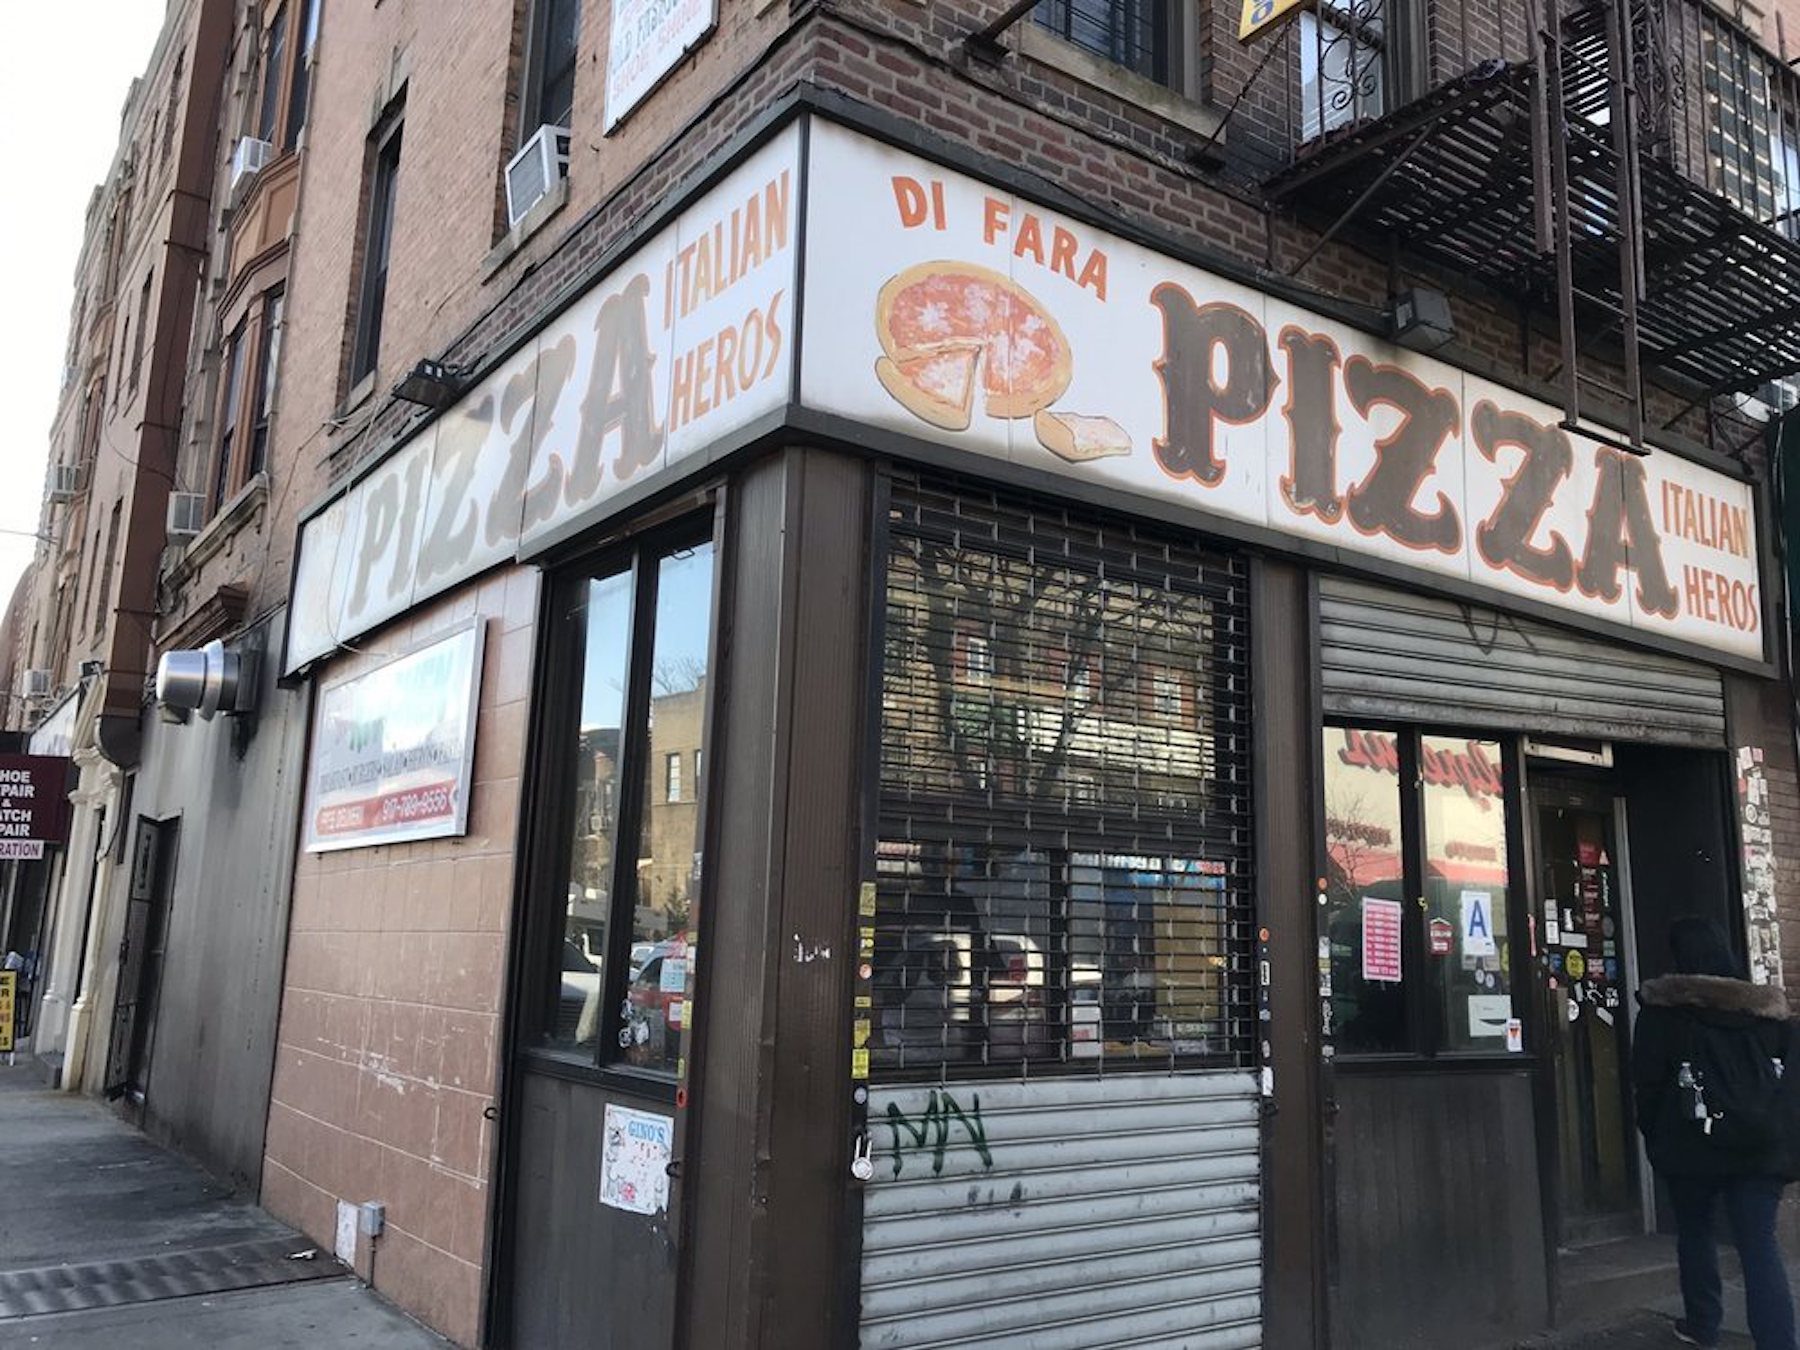 Exterior shot of the Di Fara pizza shop building in New York. 